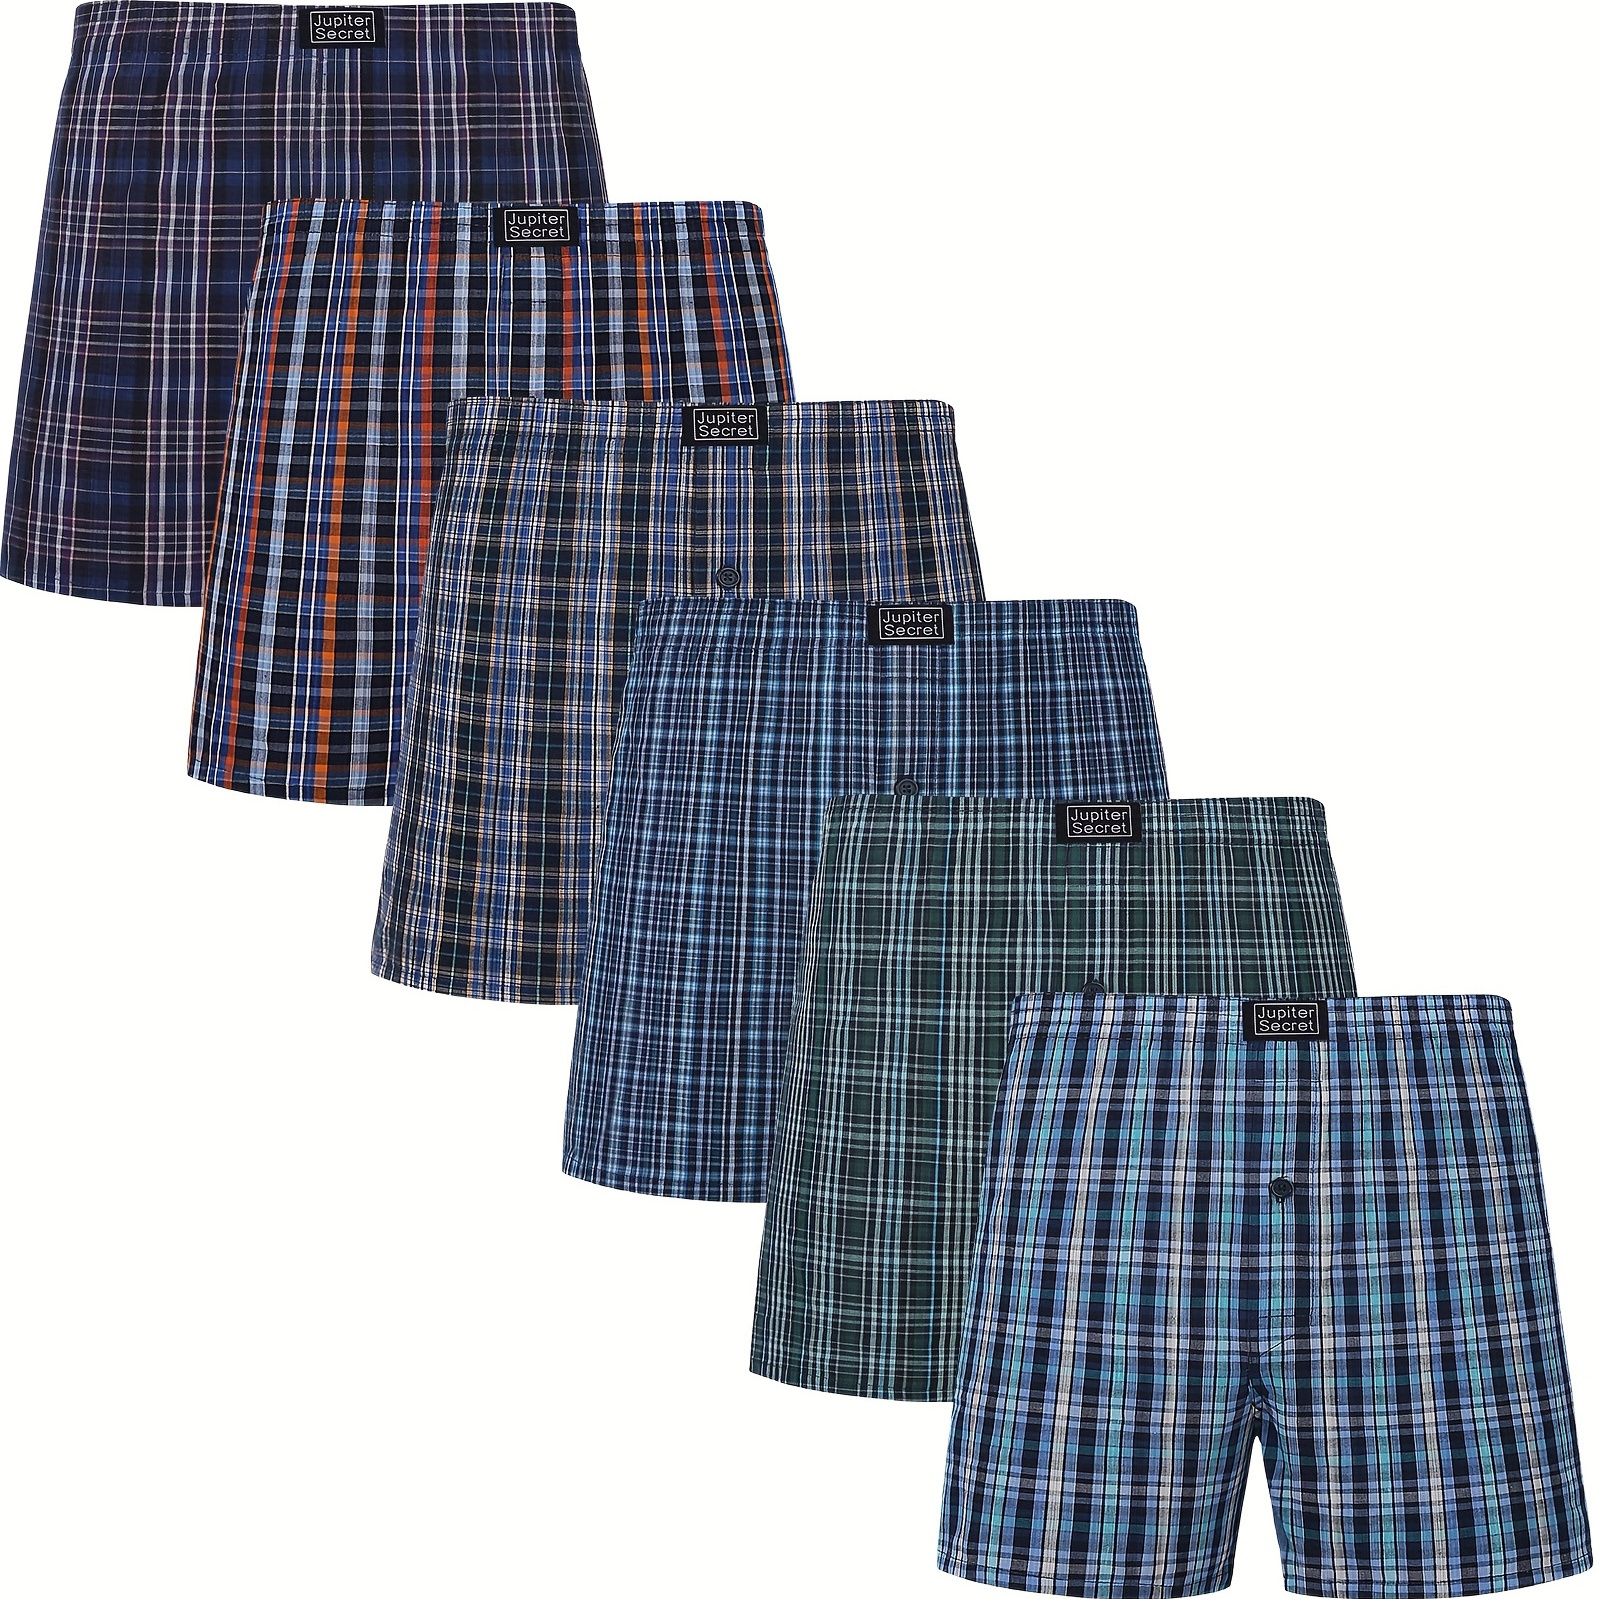 

Jupitersecret Random Style 6pcs Men's Cotton Boxer Shorts With Elastic Waistband And Buttons, Casual Plaid Boxers Shorts